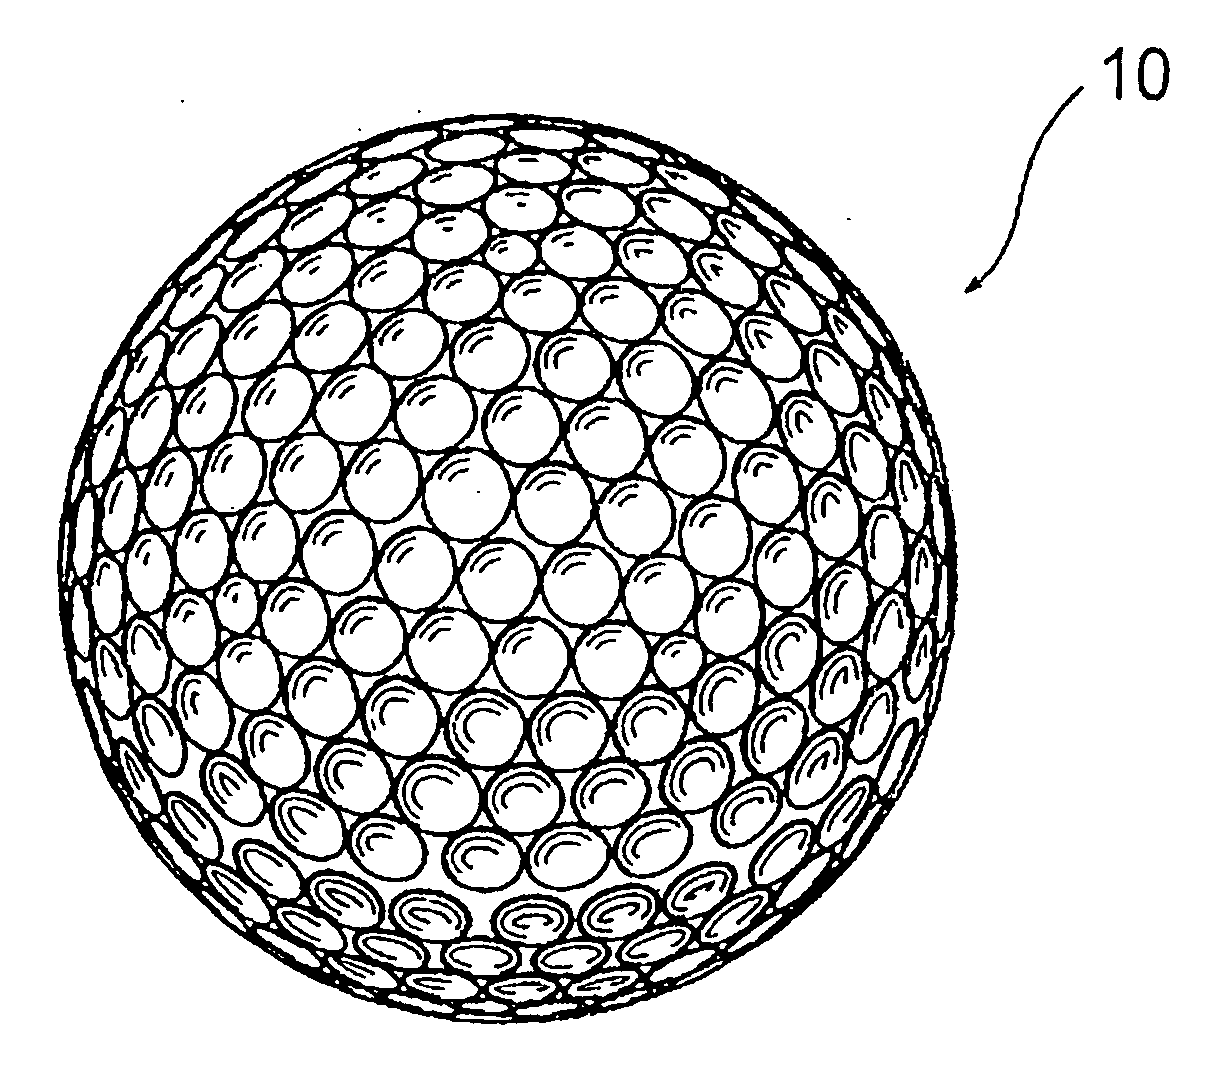 Golf ball with polysulfide rubber layer